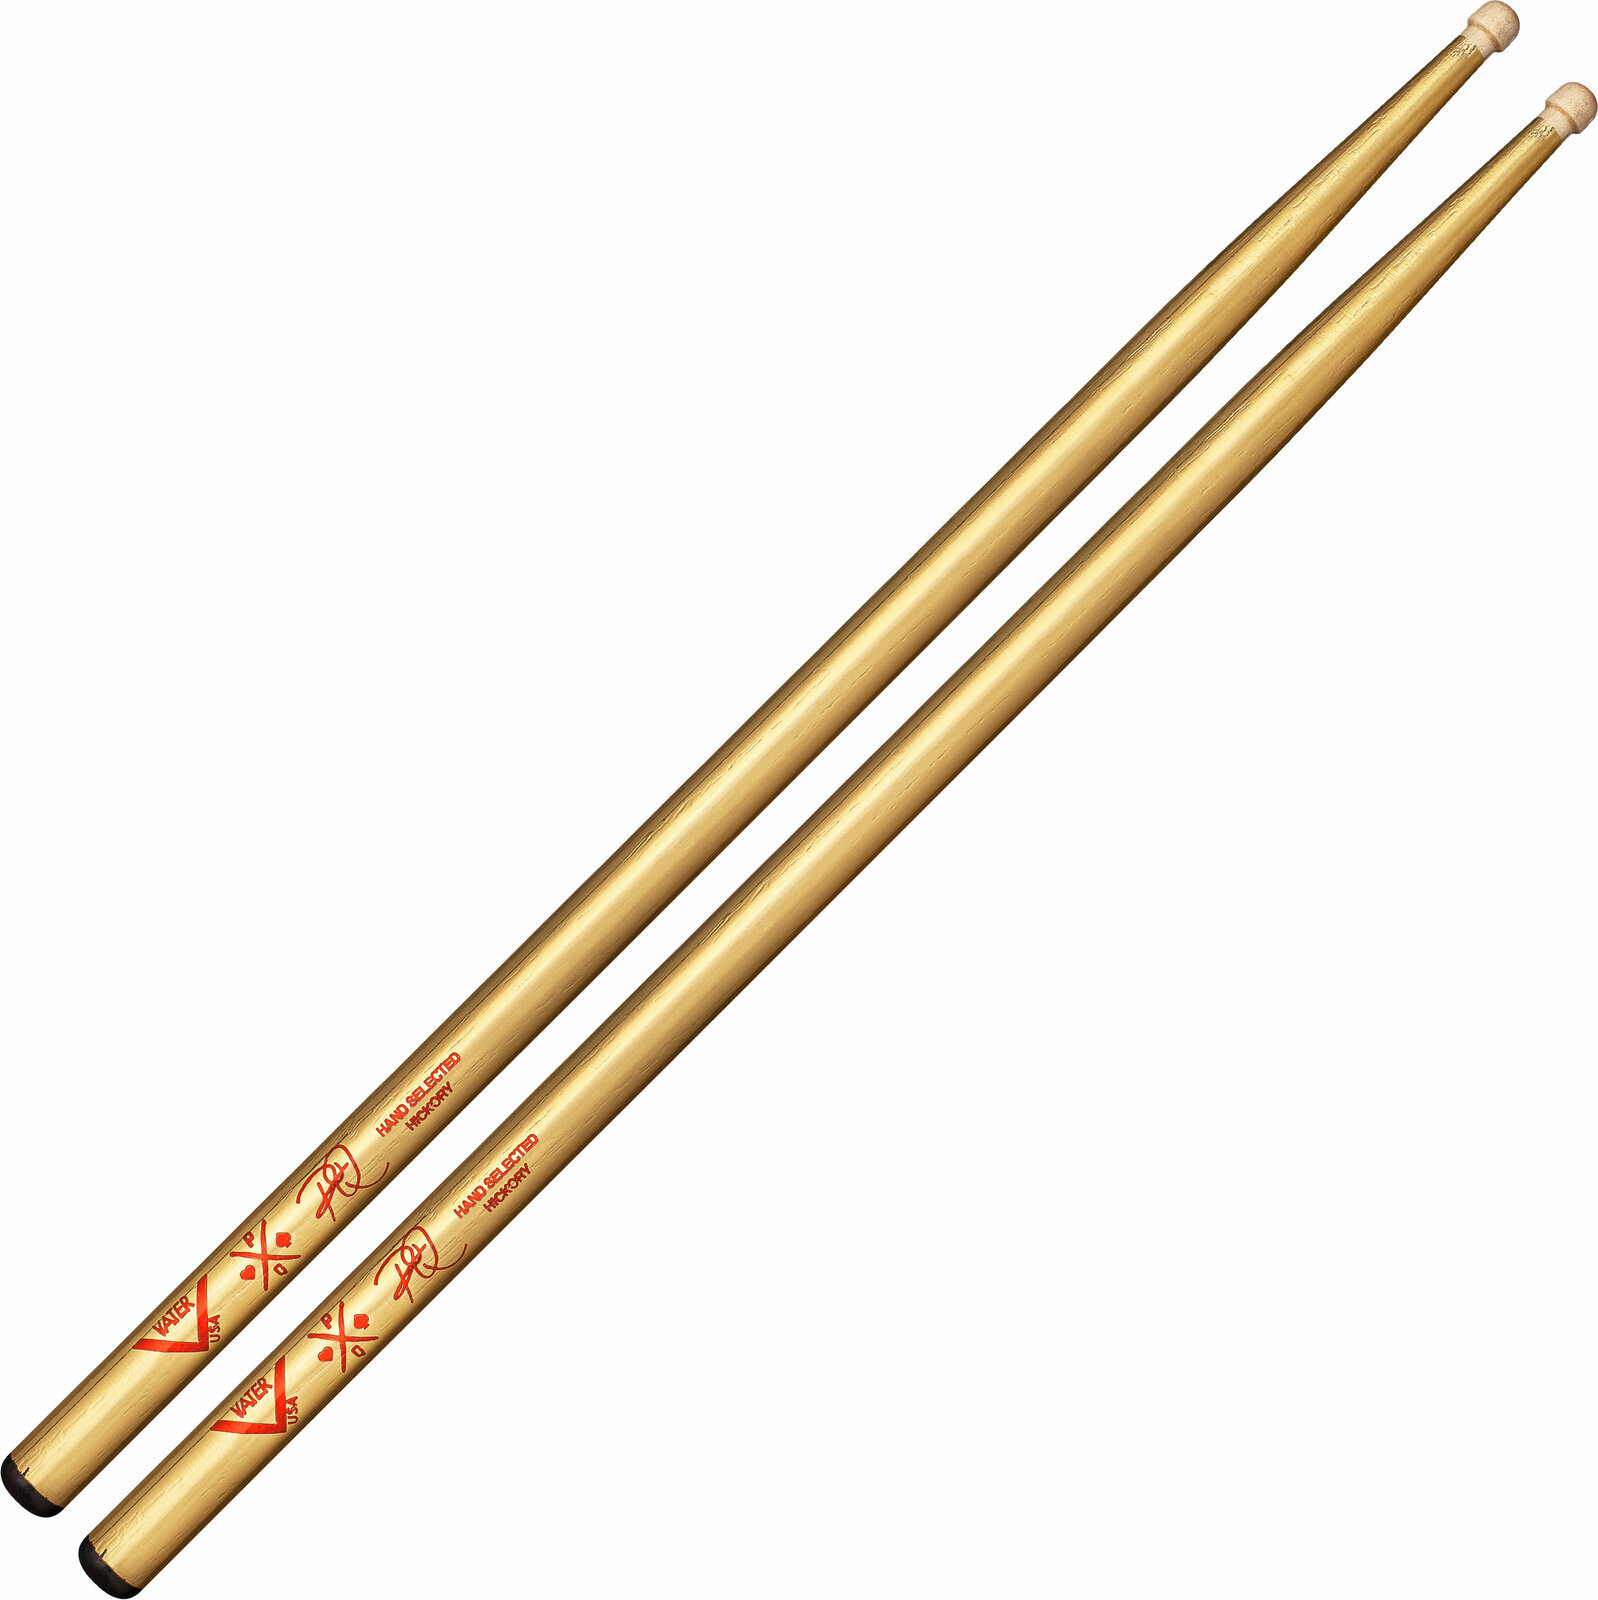 Vater VHPQW Pocket Queen Model Drumsticks